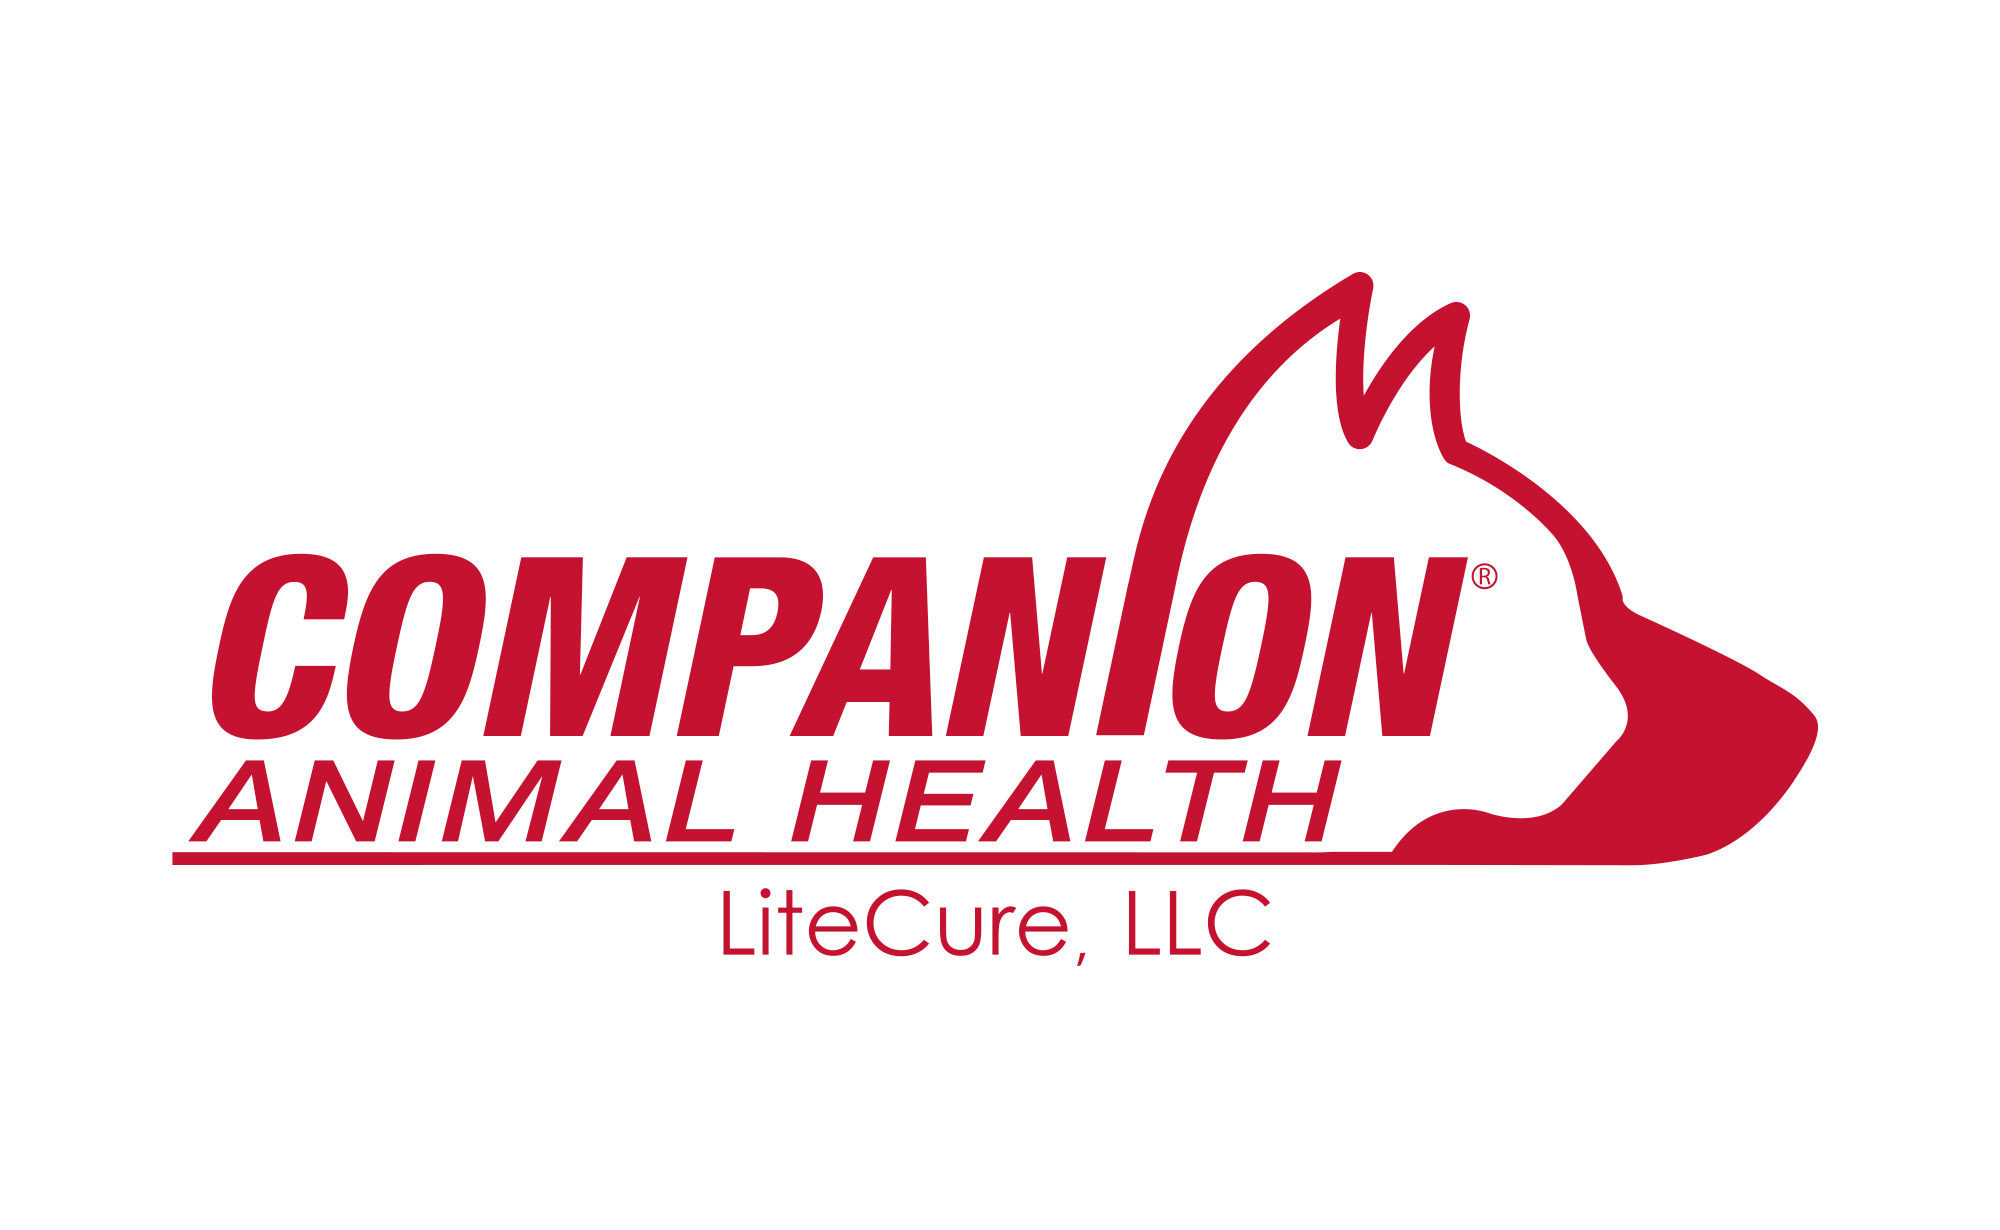 Companion Animal Health